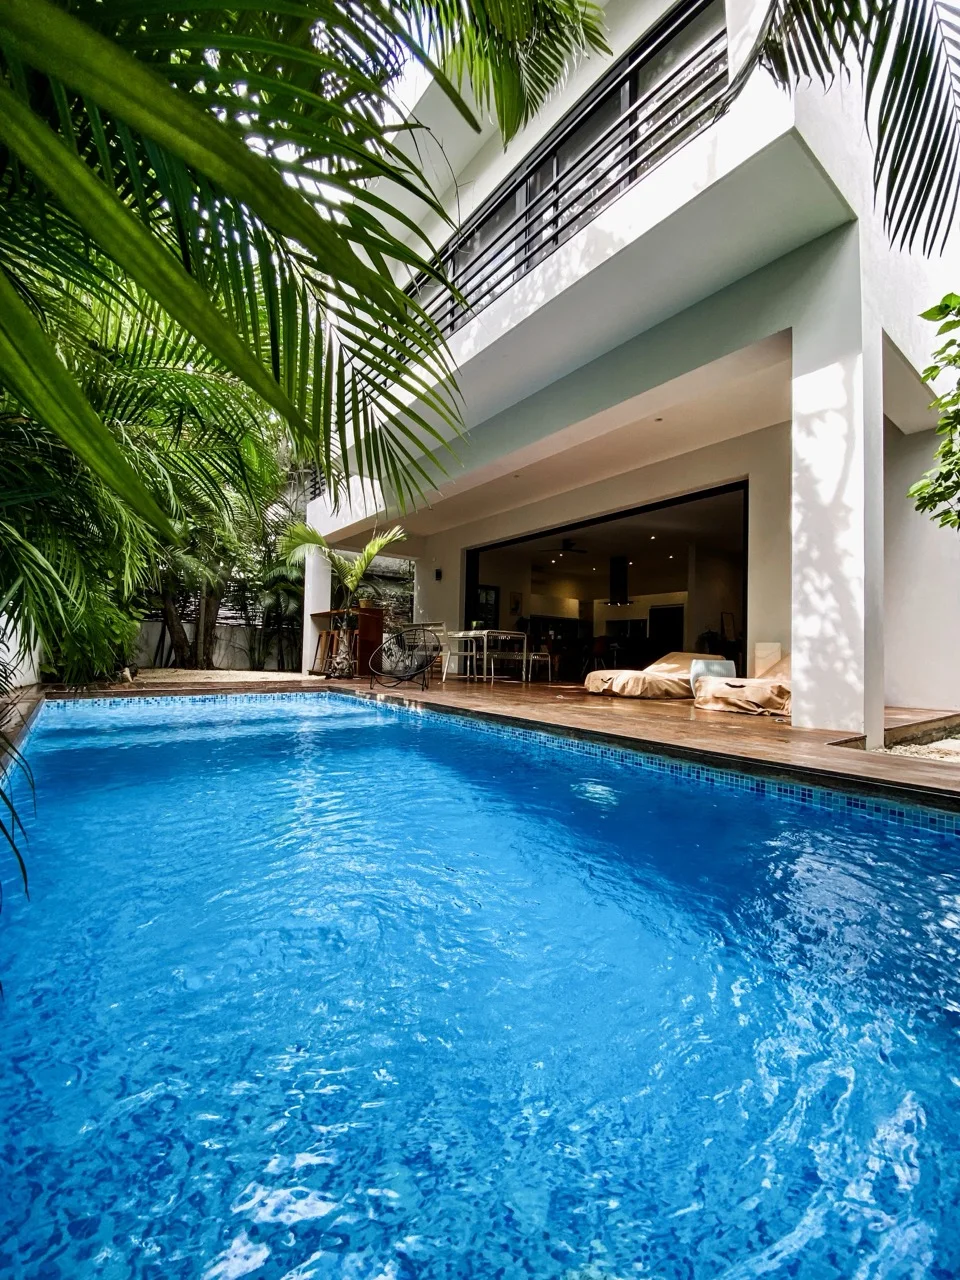 Dream Home in Riviera Maya:4 BR Villa with Pool & Beach Club